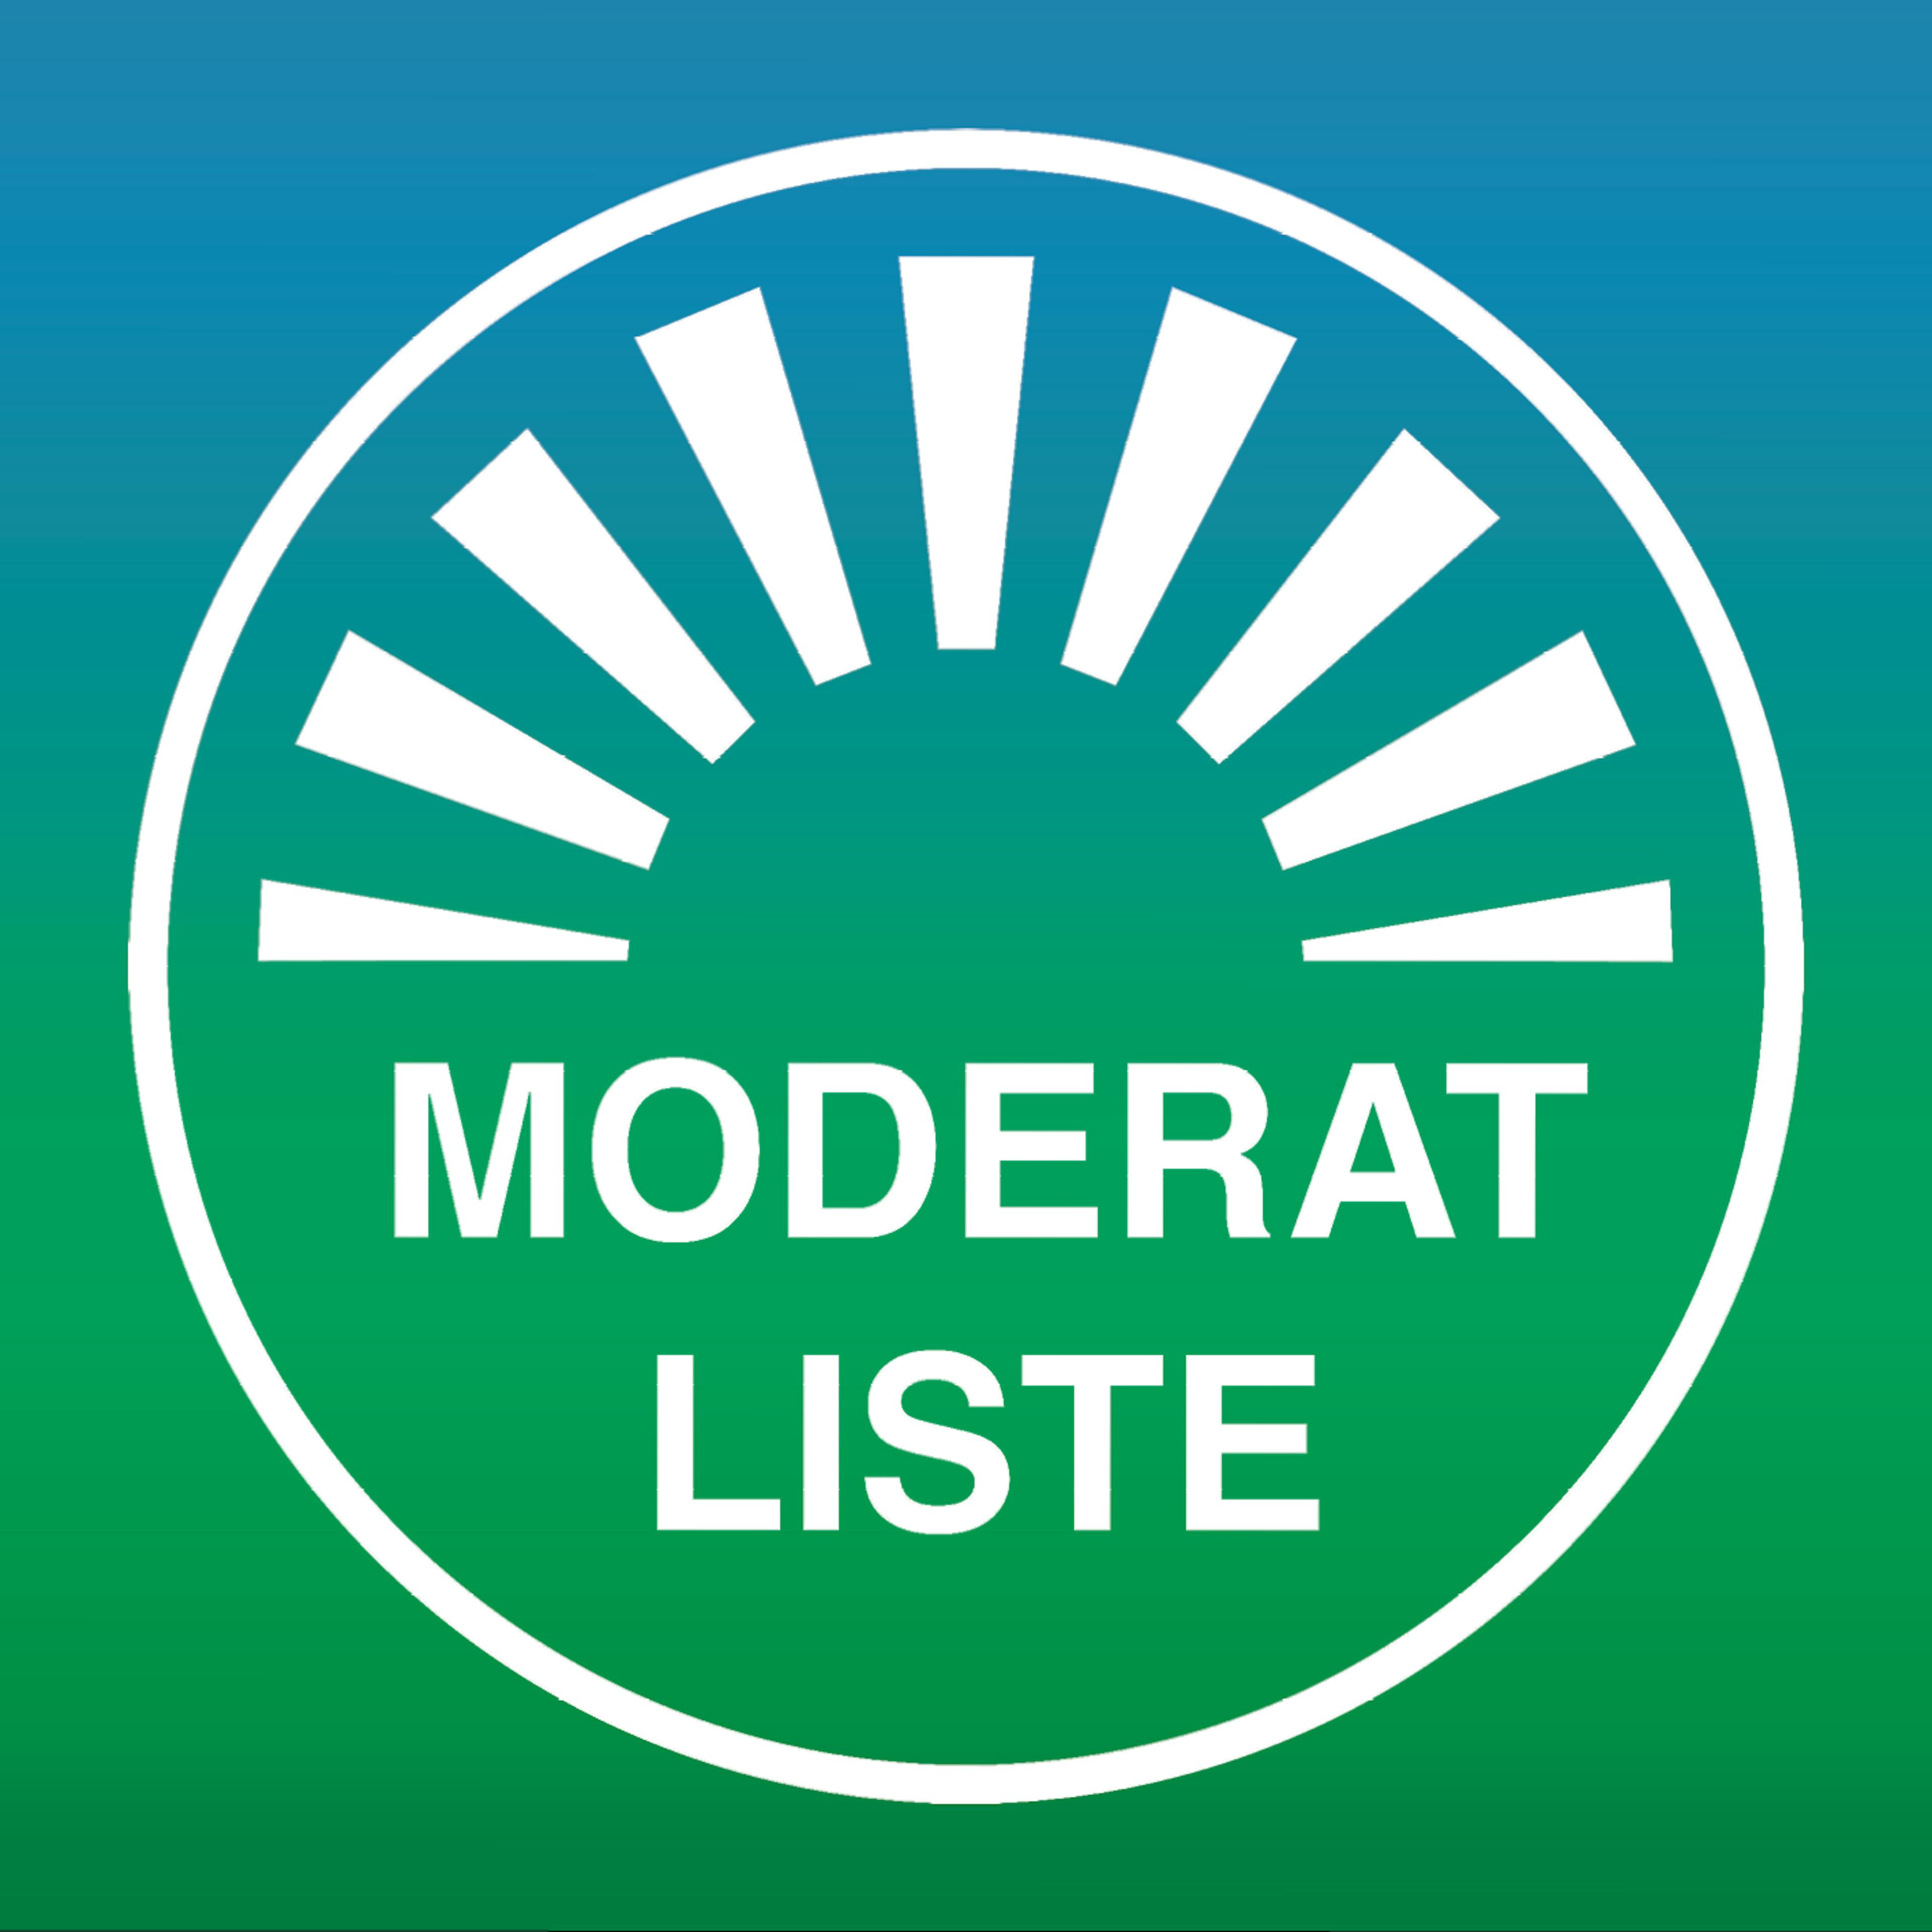 Moderat liste